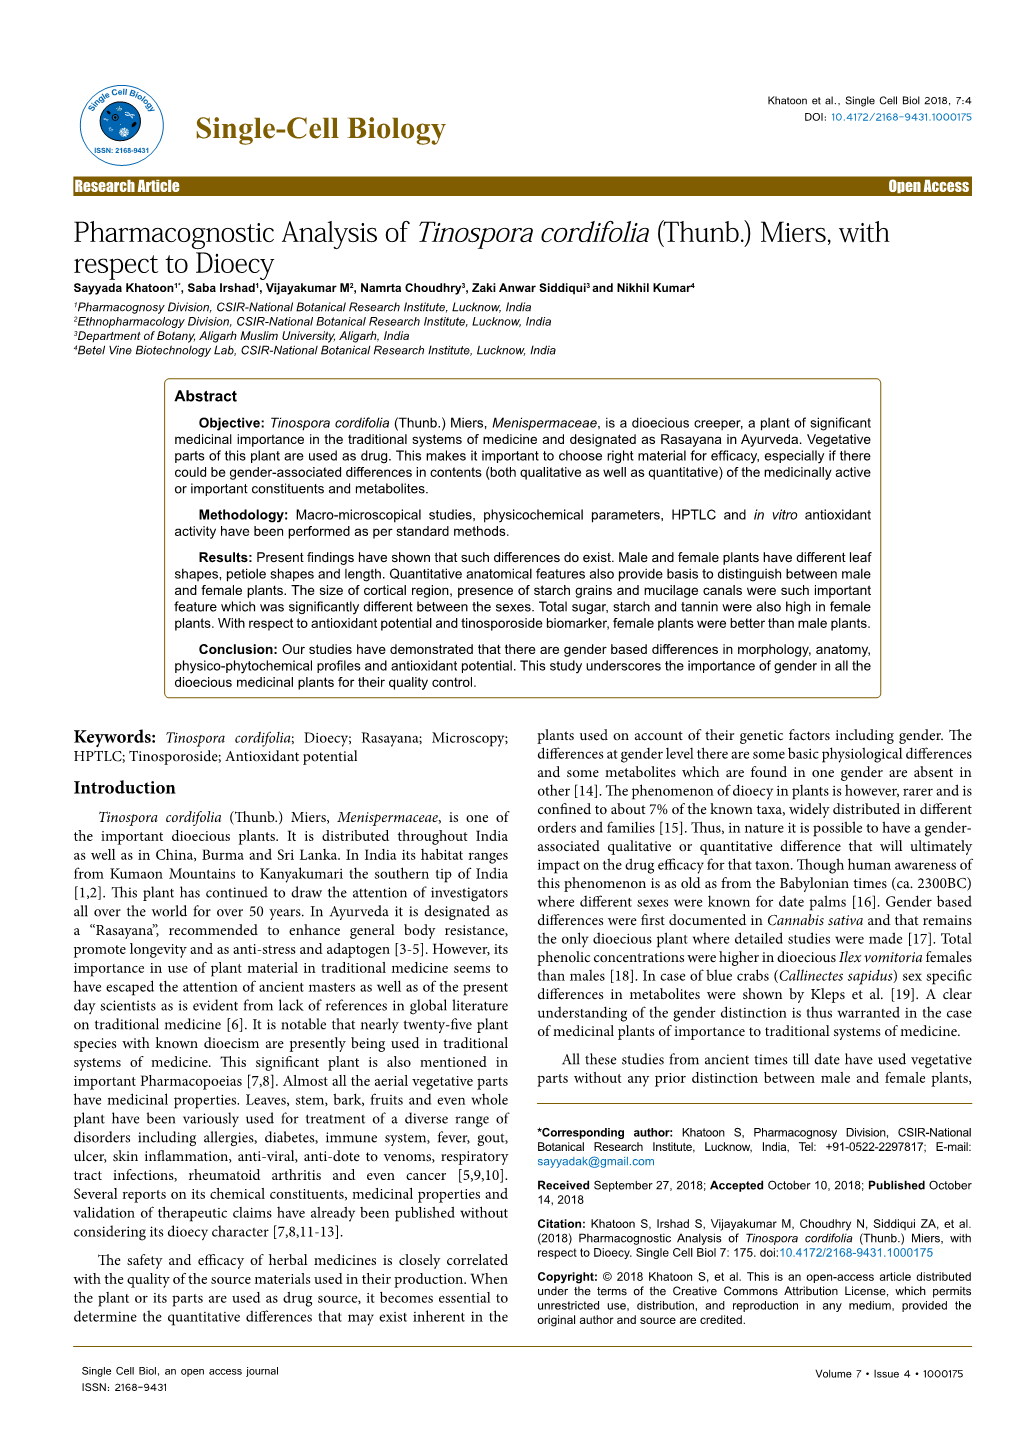 Pharmacognostic Analysis of Tinospora Cordifolia (Thunb.) Miers